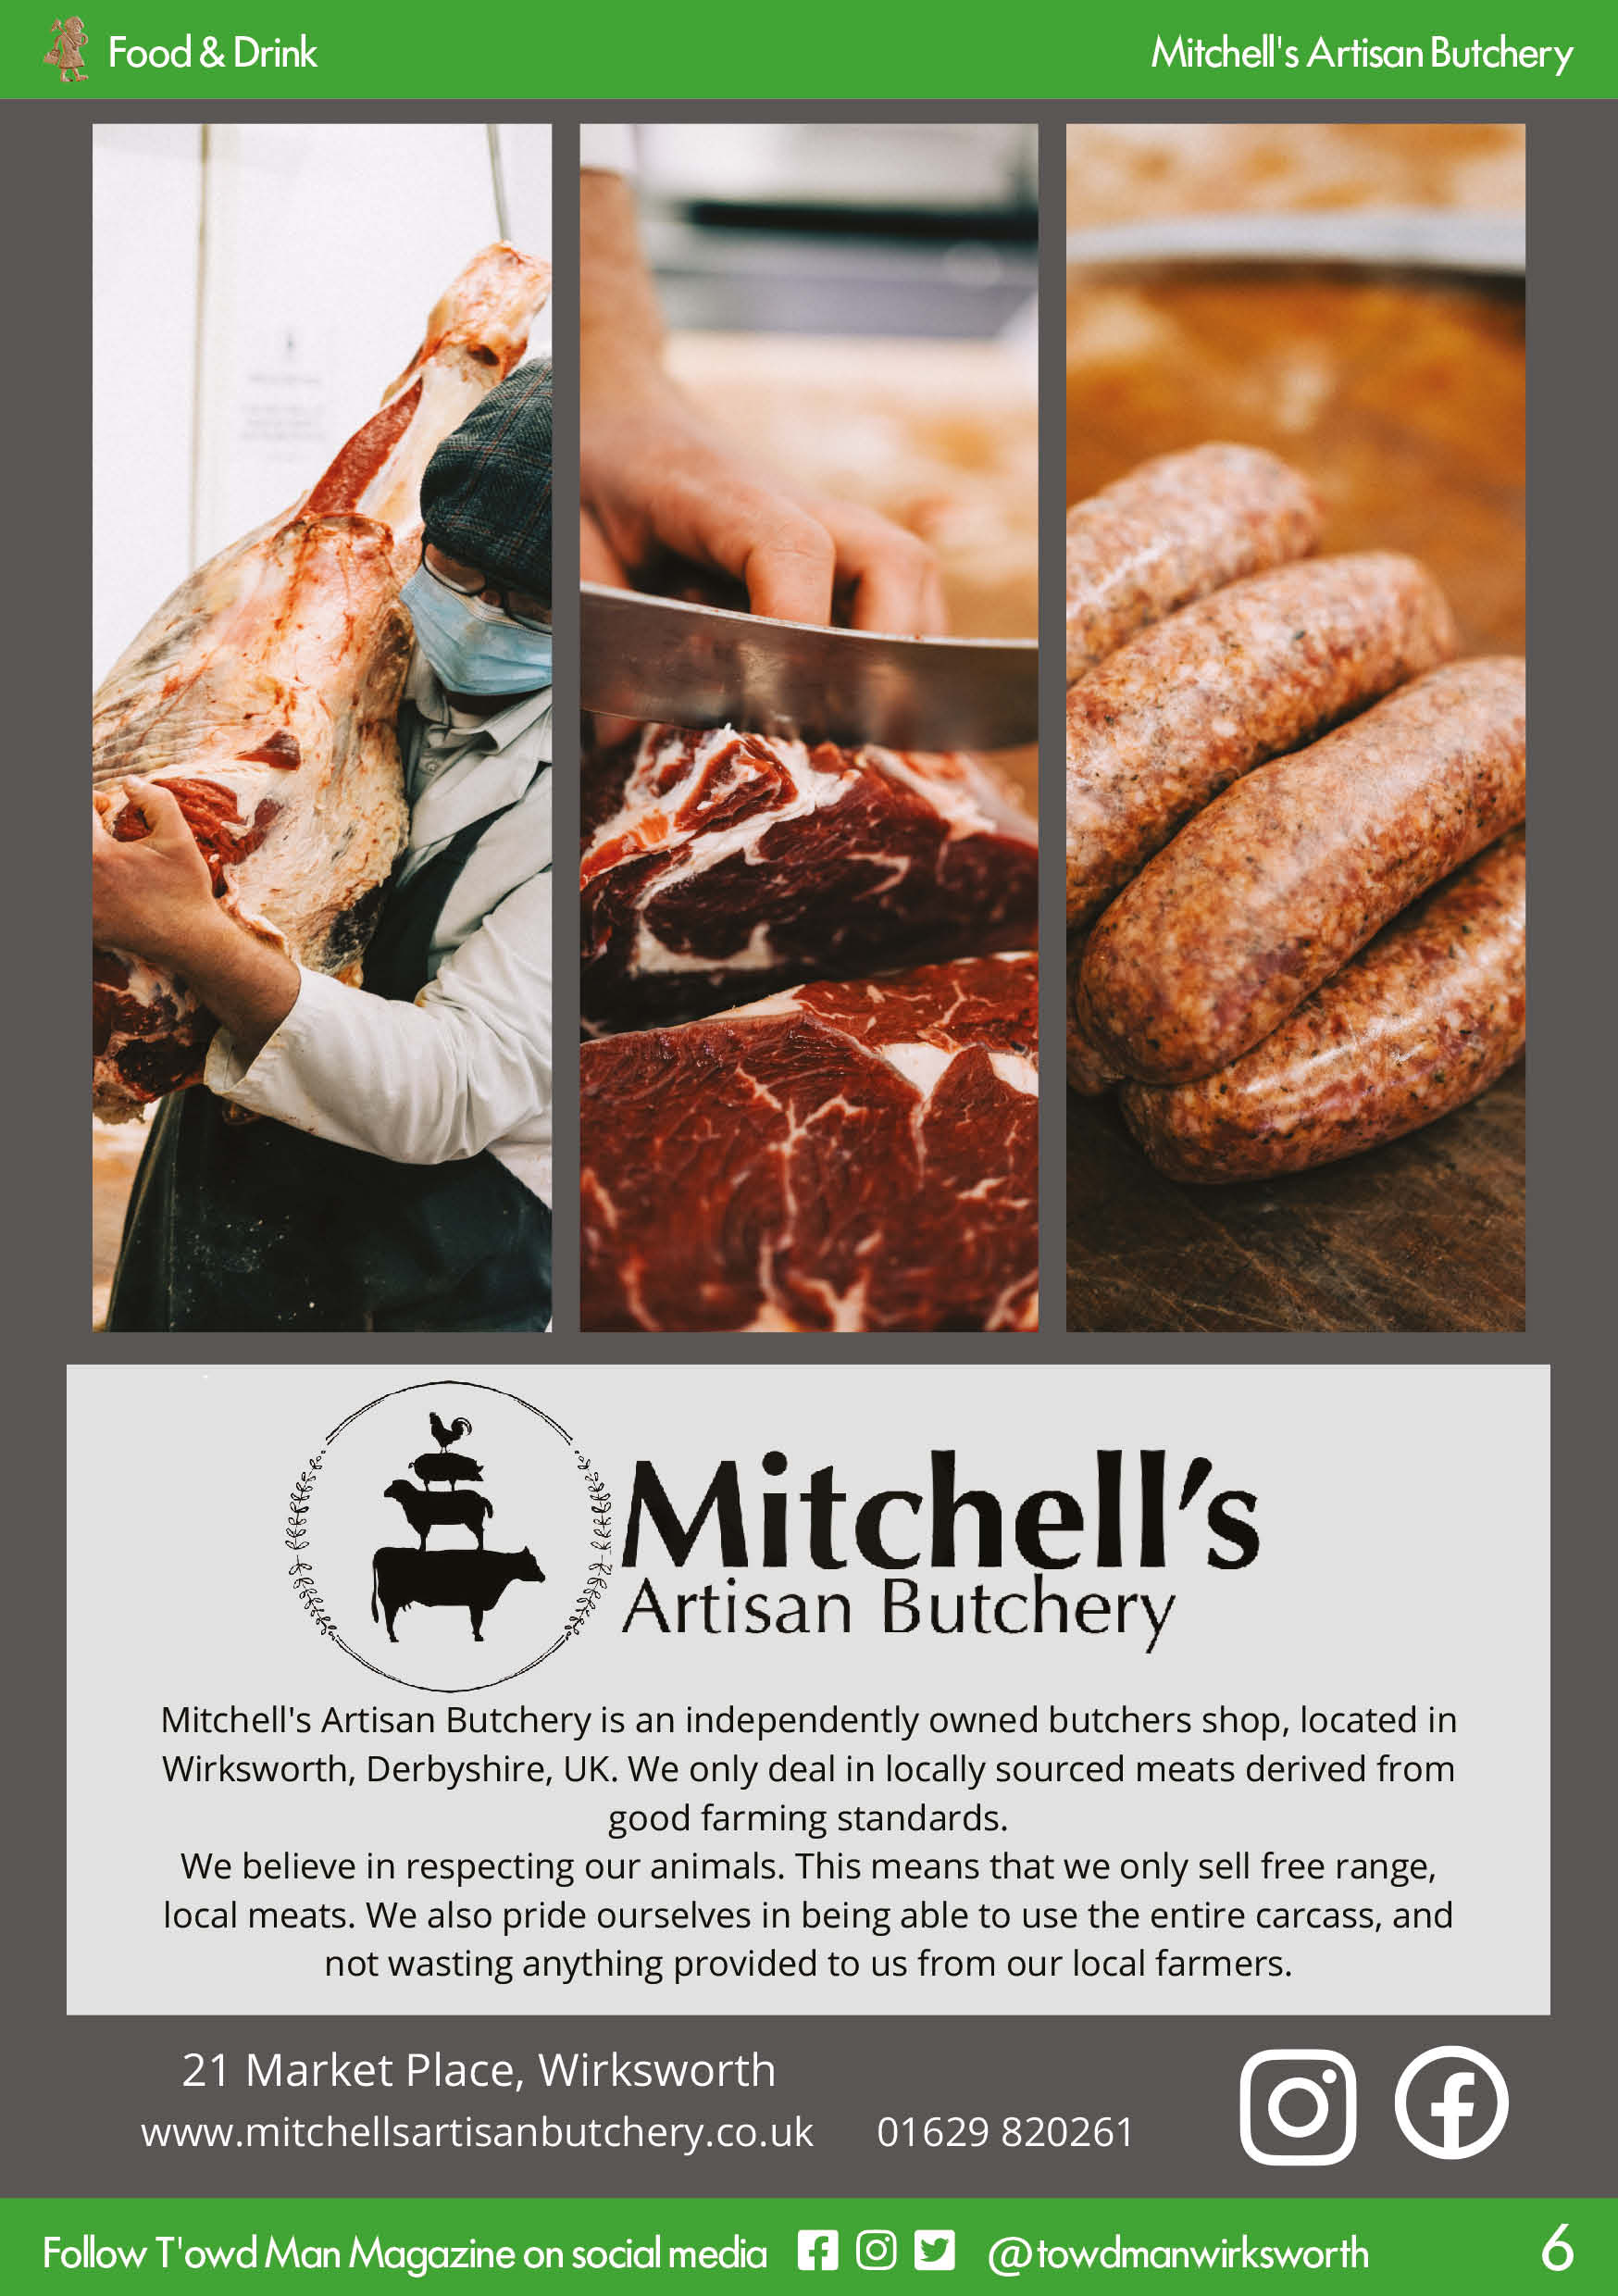 Mitchells Artisan Butchery